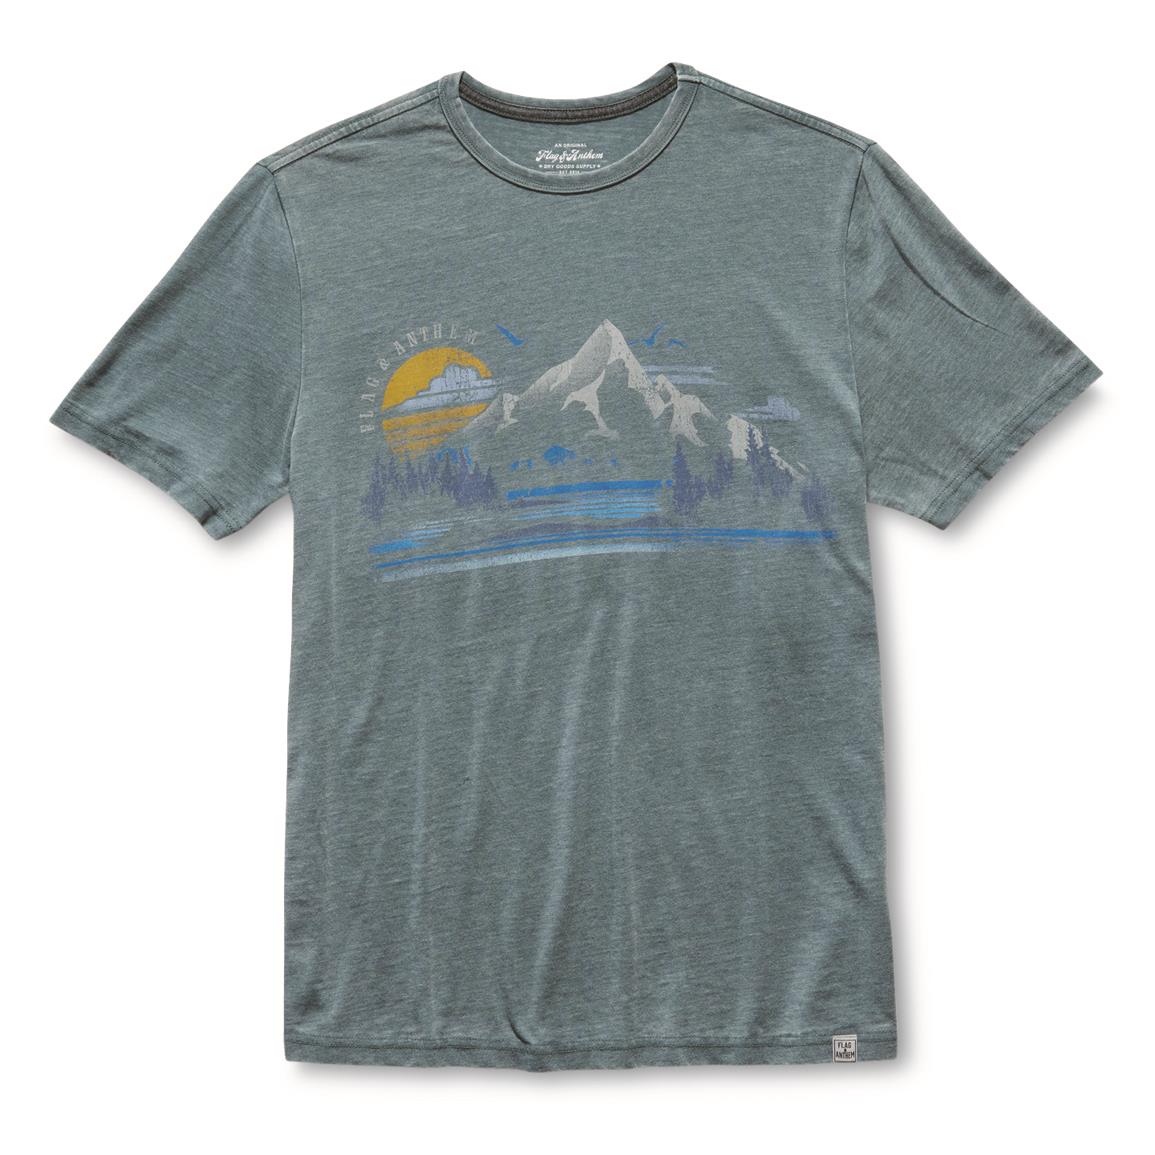 Flag & Anthem Men's Scenic Mountain Shirt, Sea Green